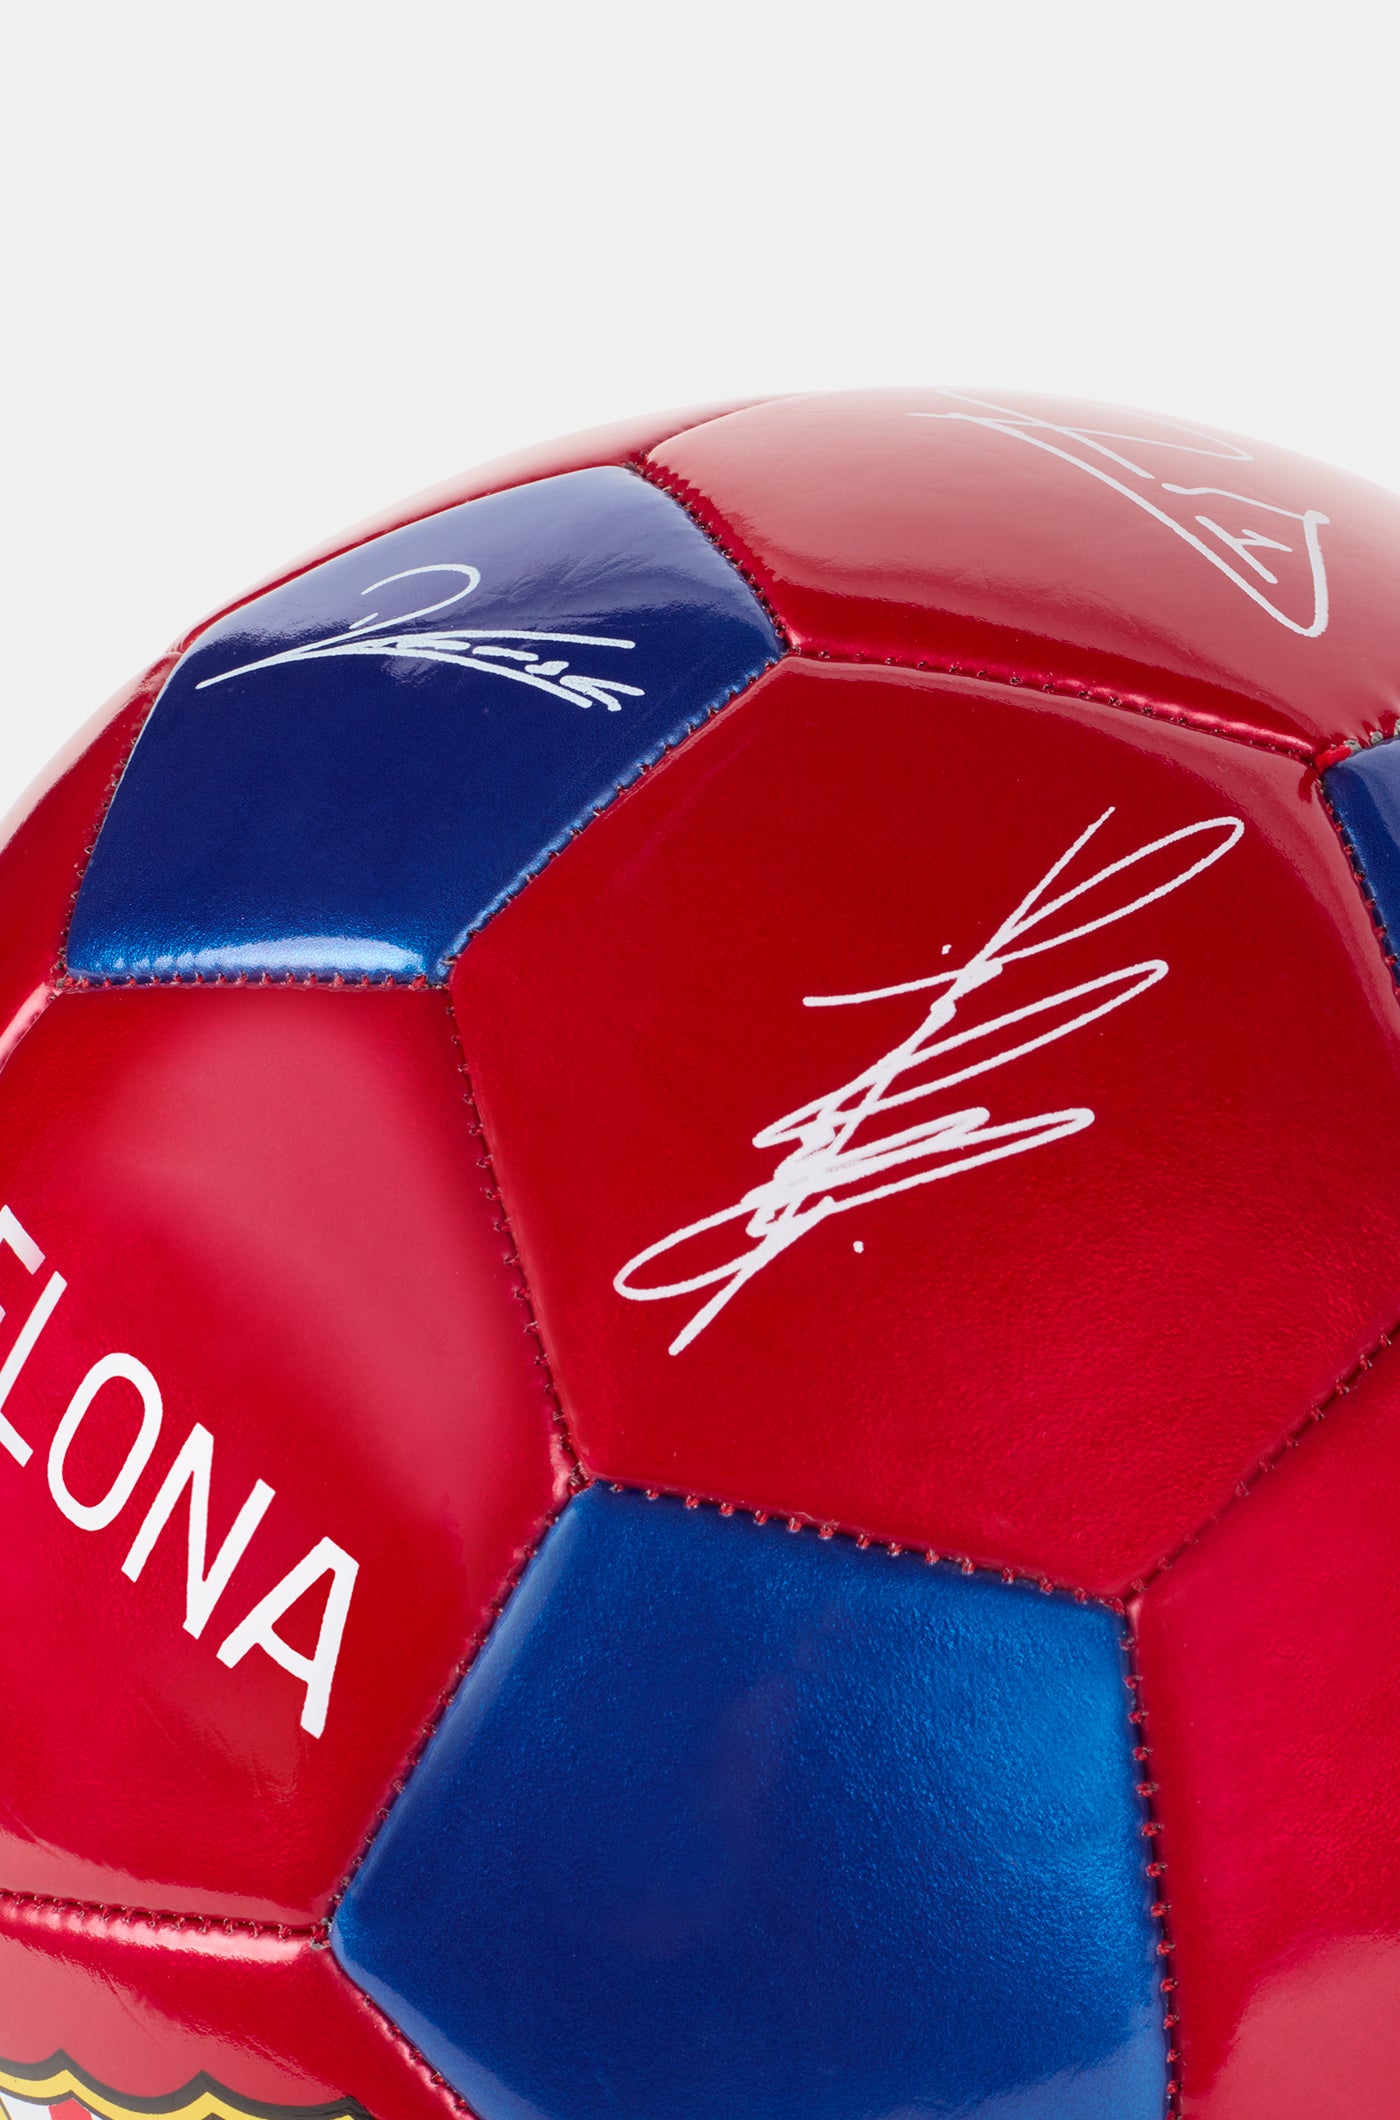 FC Barcelona Ball - Large